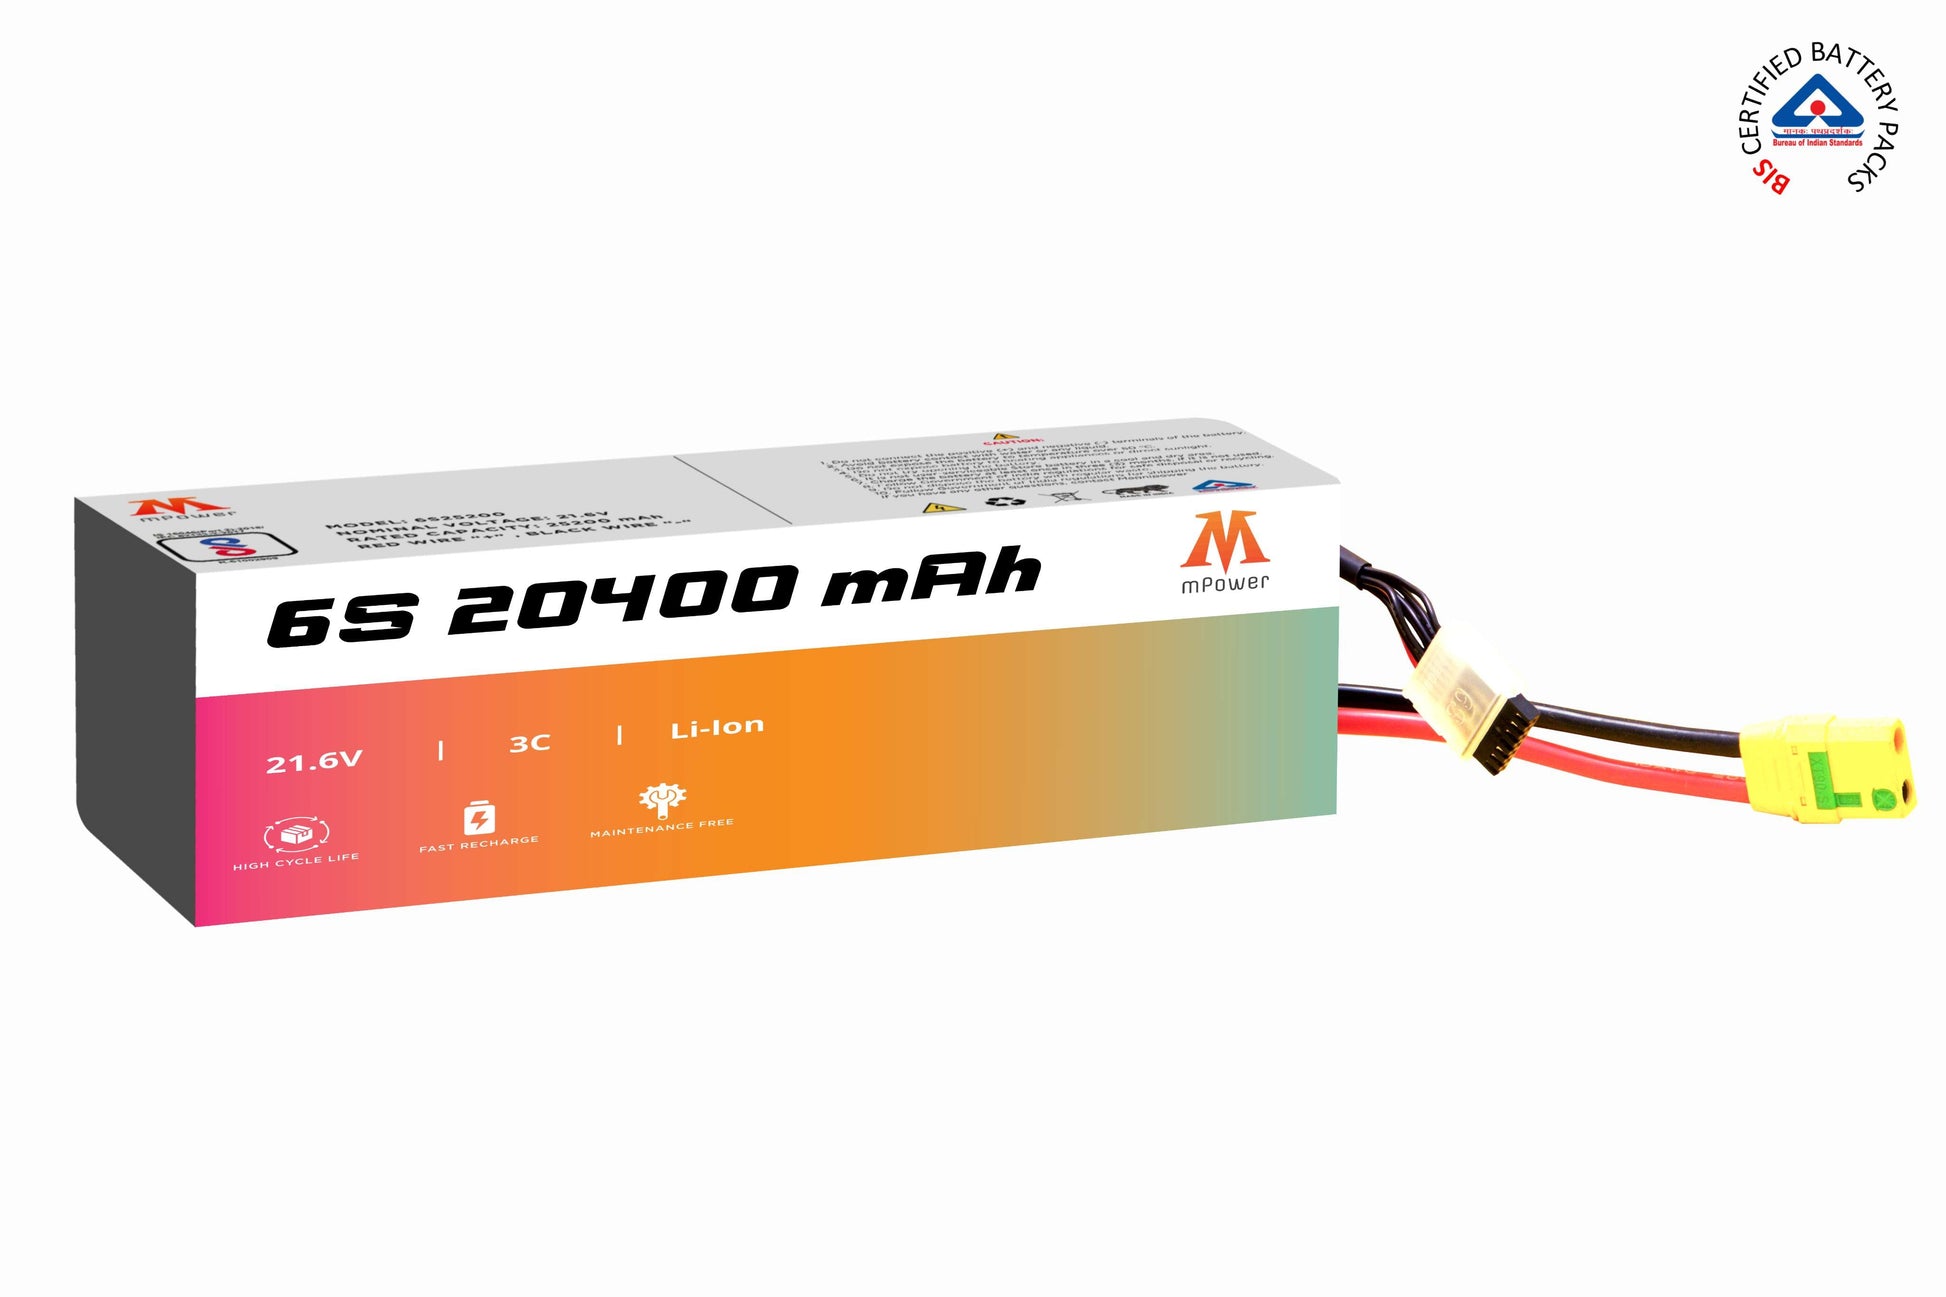 mPower 6S 20400mAh Lithium-Ion Battery for Surveillance Drones-mpowerlithium